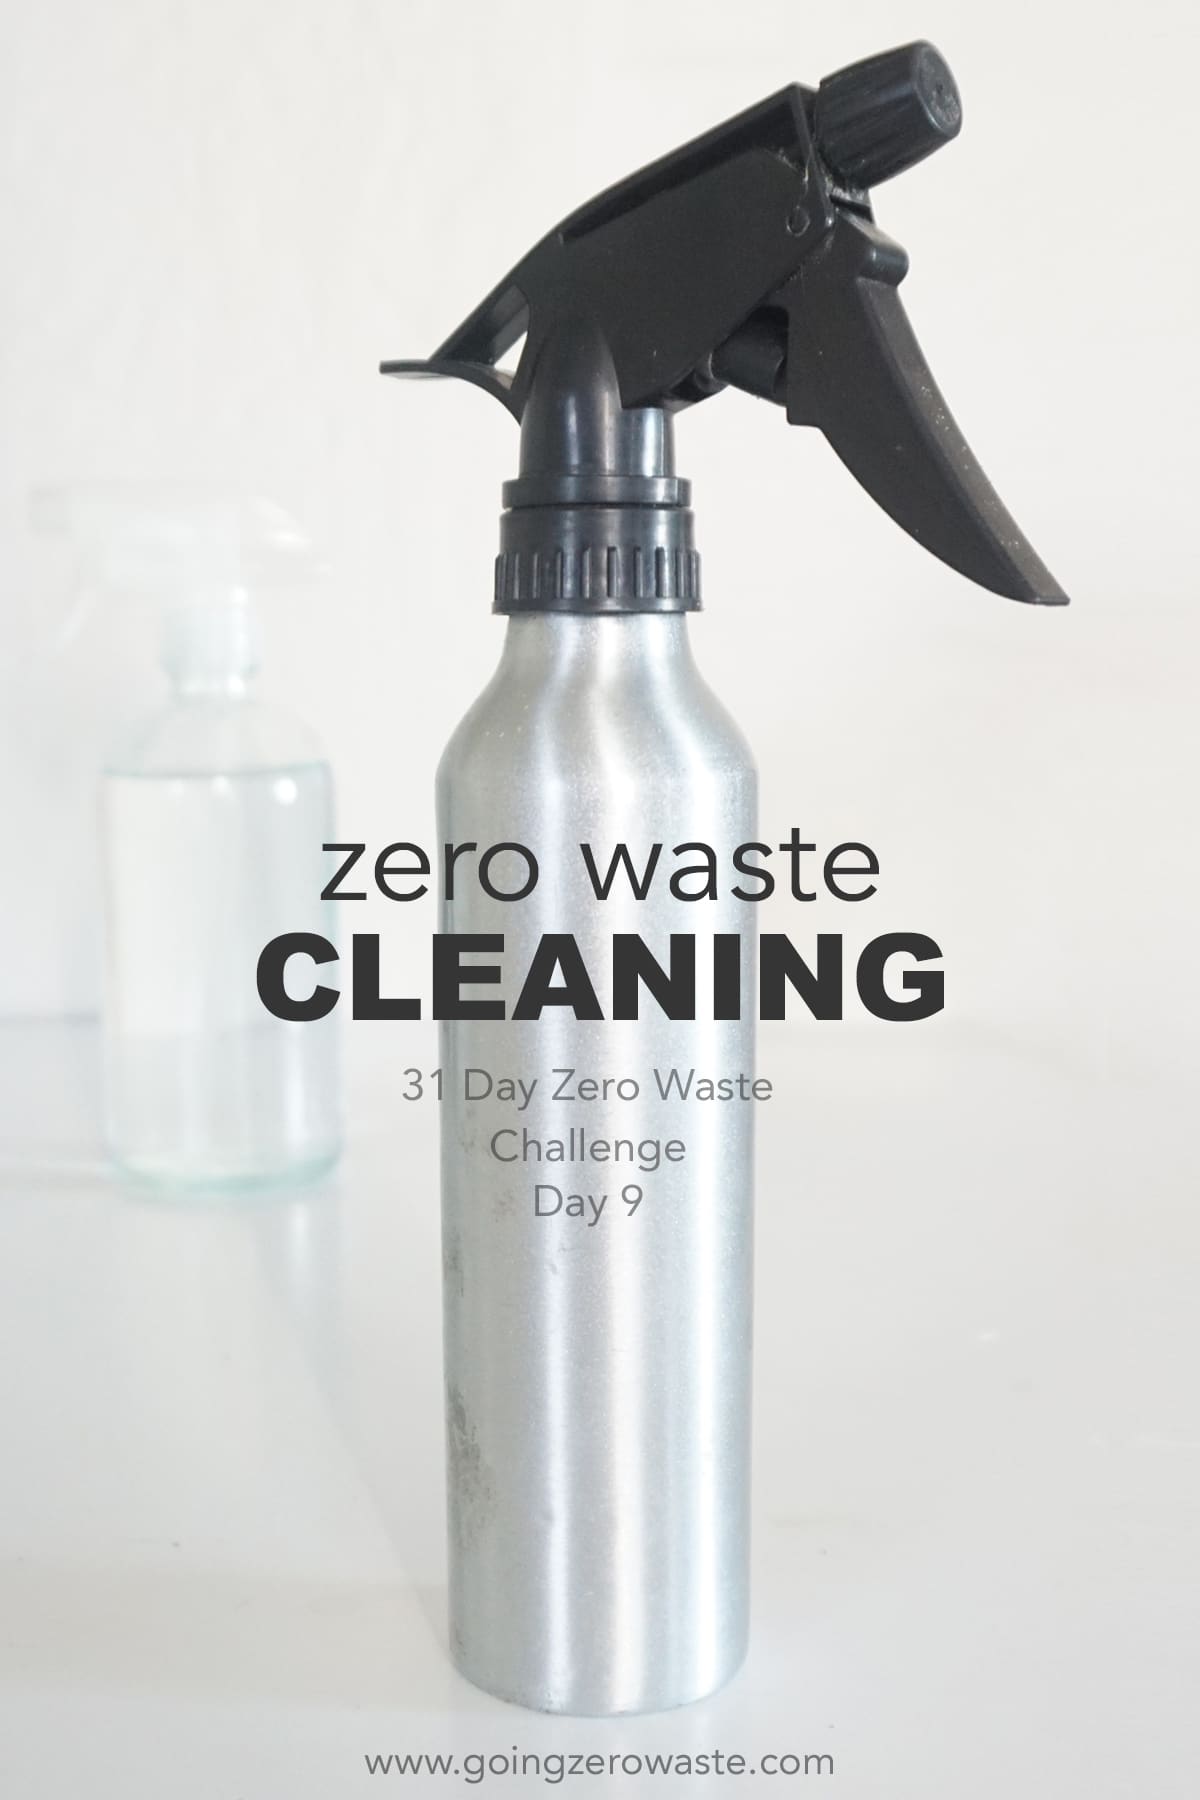 Zero Waste Cleaning - Day 9 of the Zero Waste Challenge